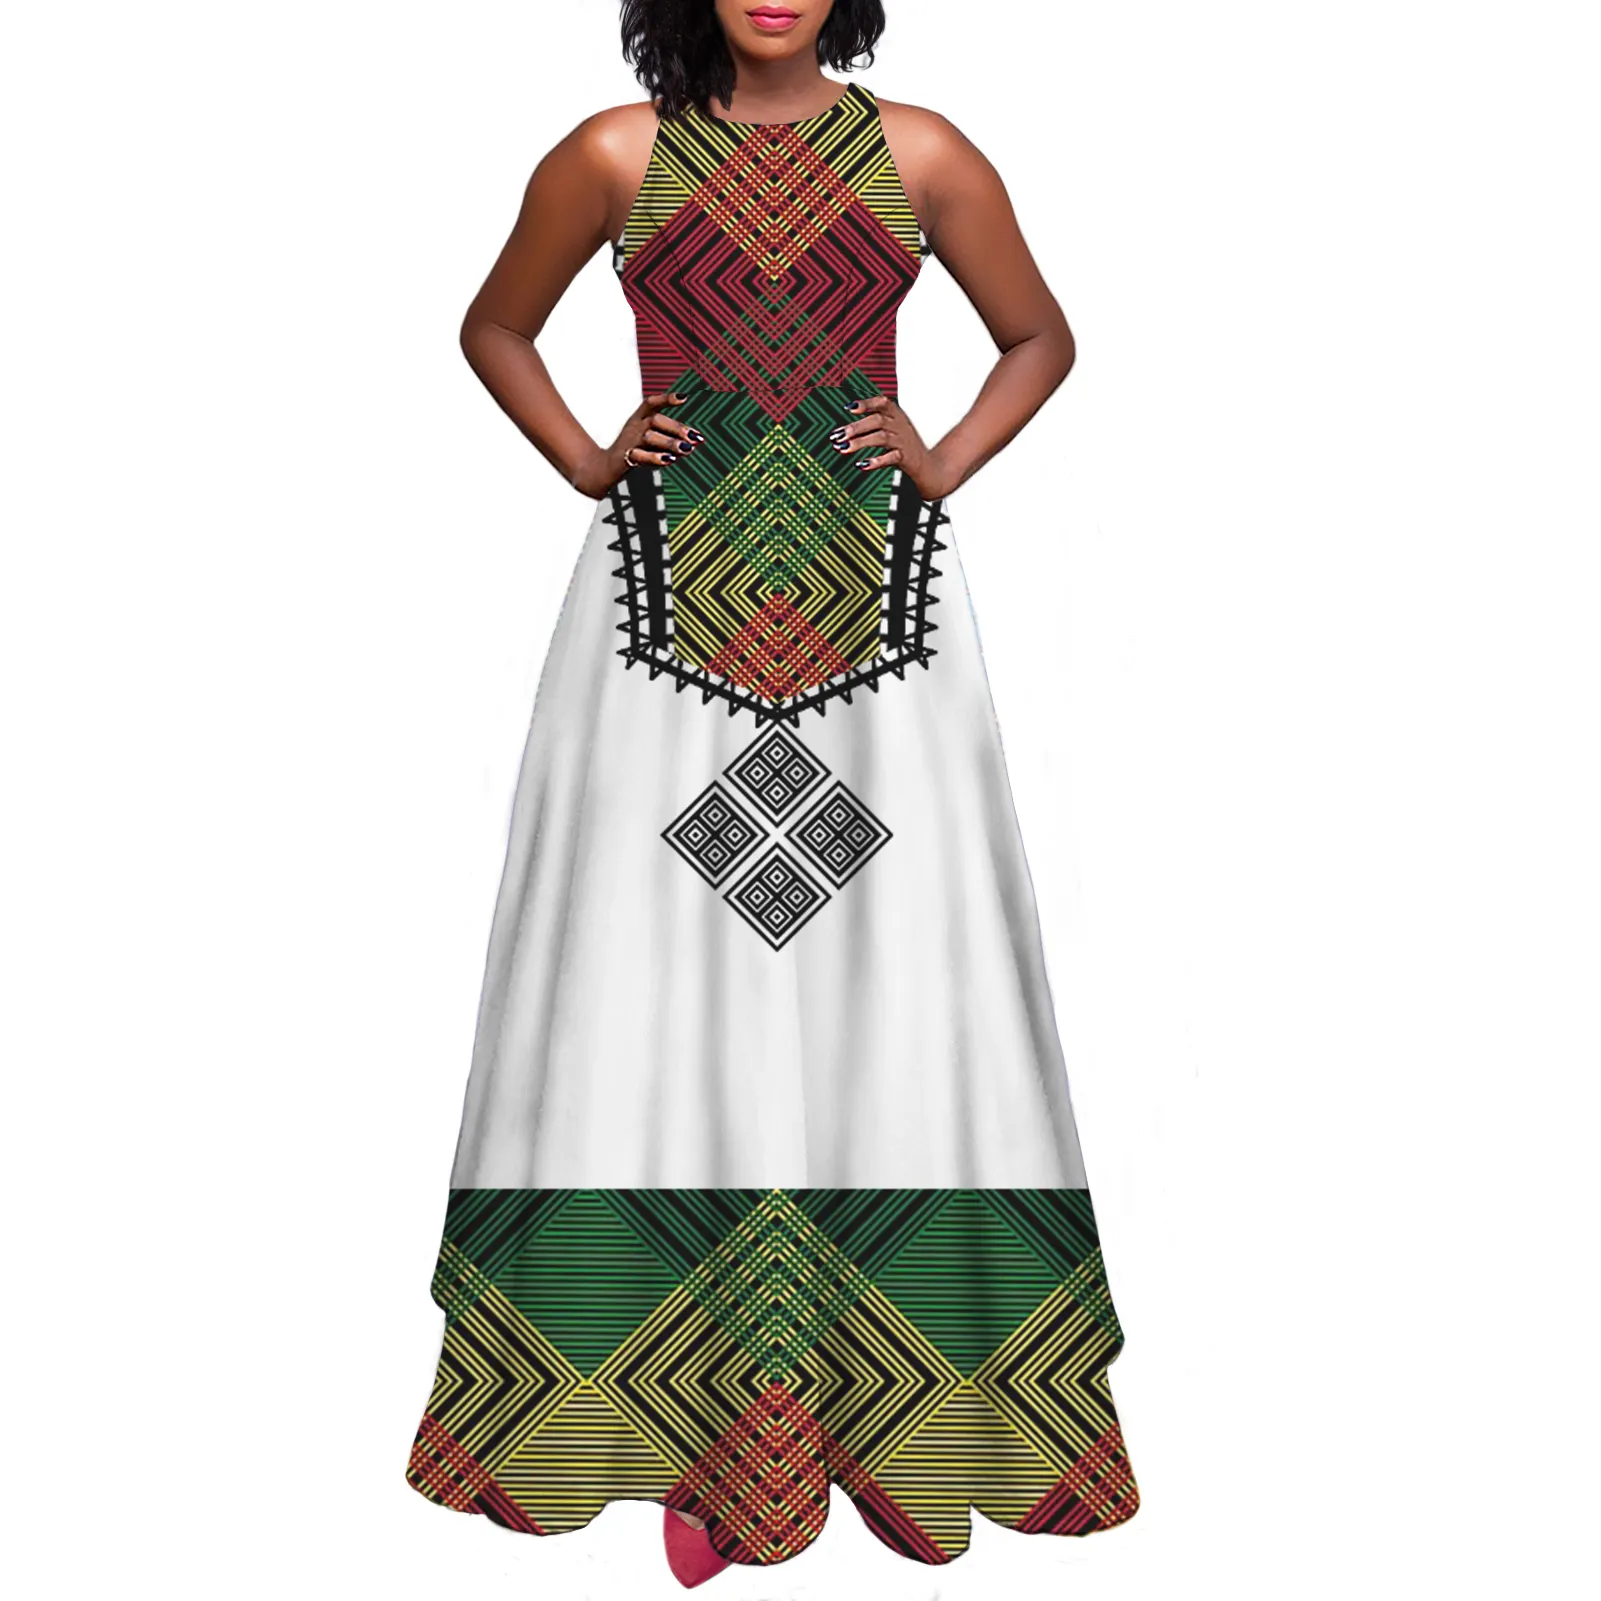 Groothandel Afrikaanse Stijl Ethiopische Habesha Bloemen Vrouwen Avondjurk Samoan Fijian Plus Size Maxi Jurk Vintage Ethiopia Jurk